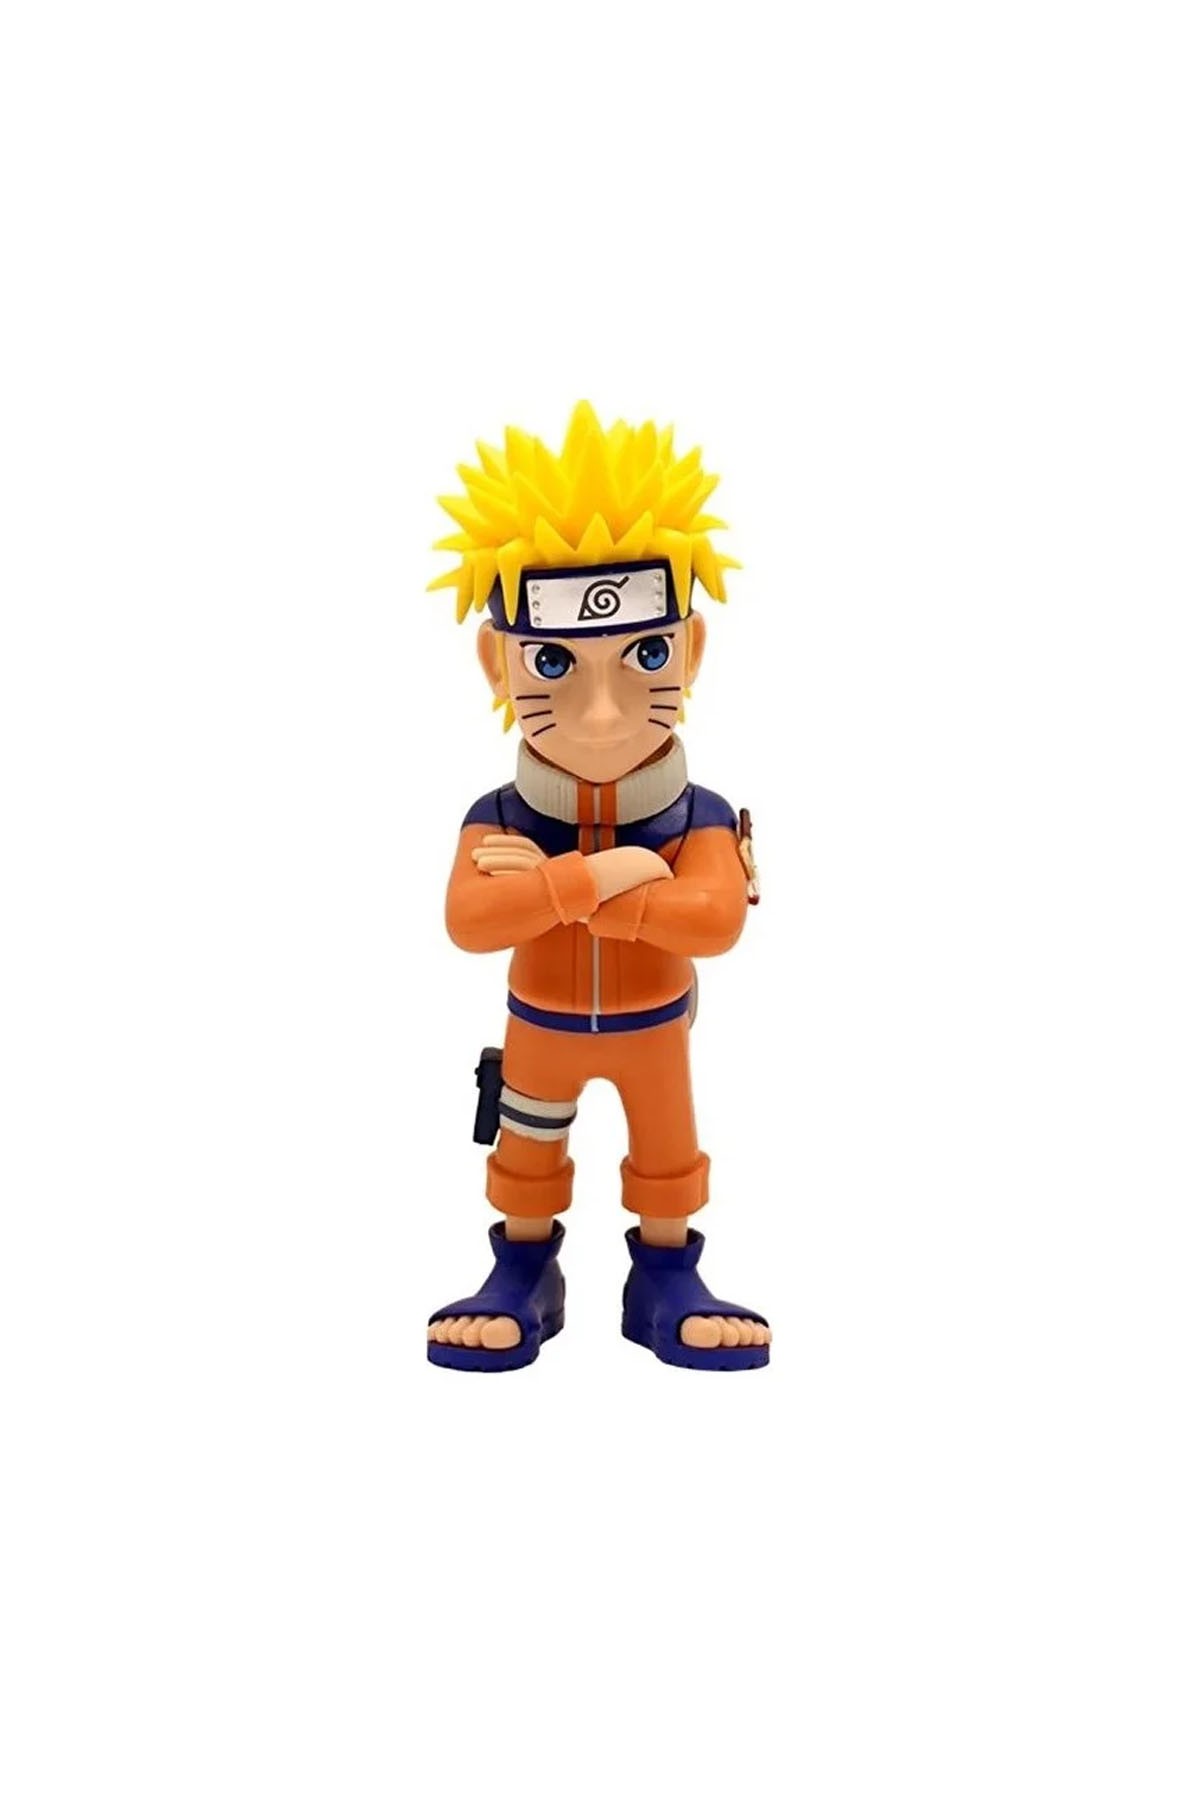 Minix Naruto Figür 11308